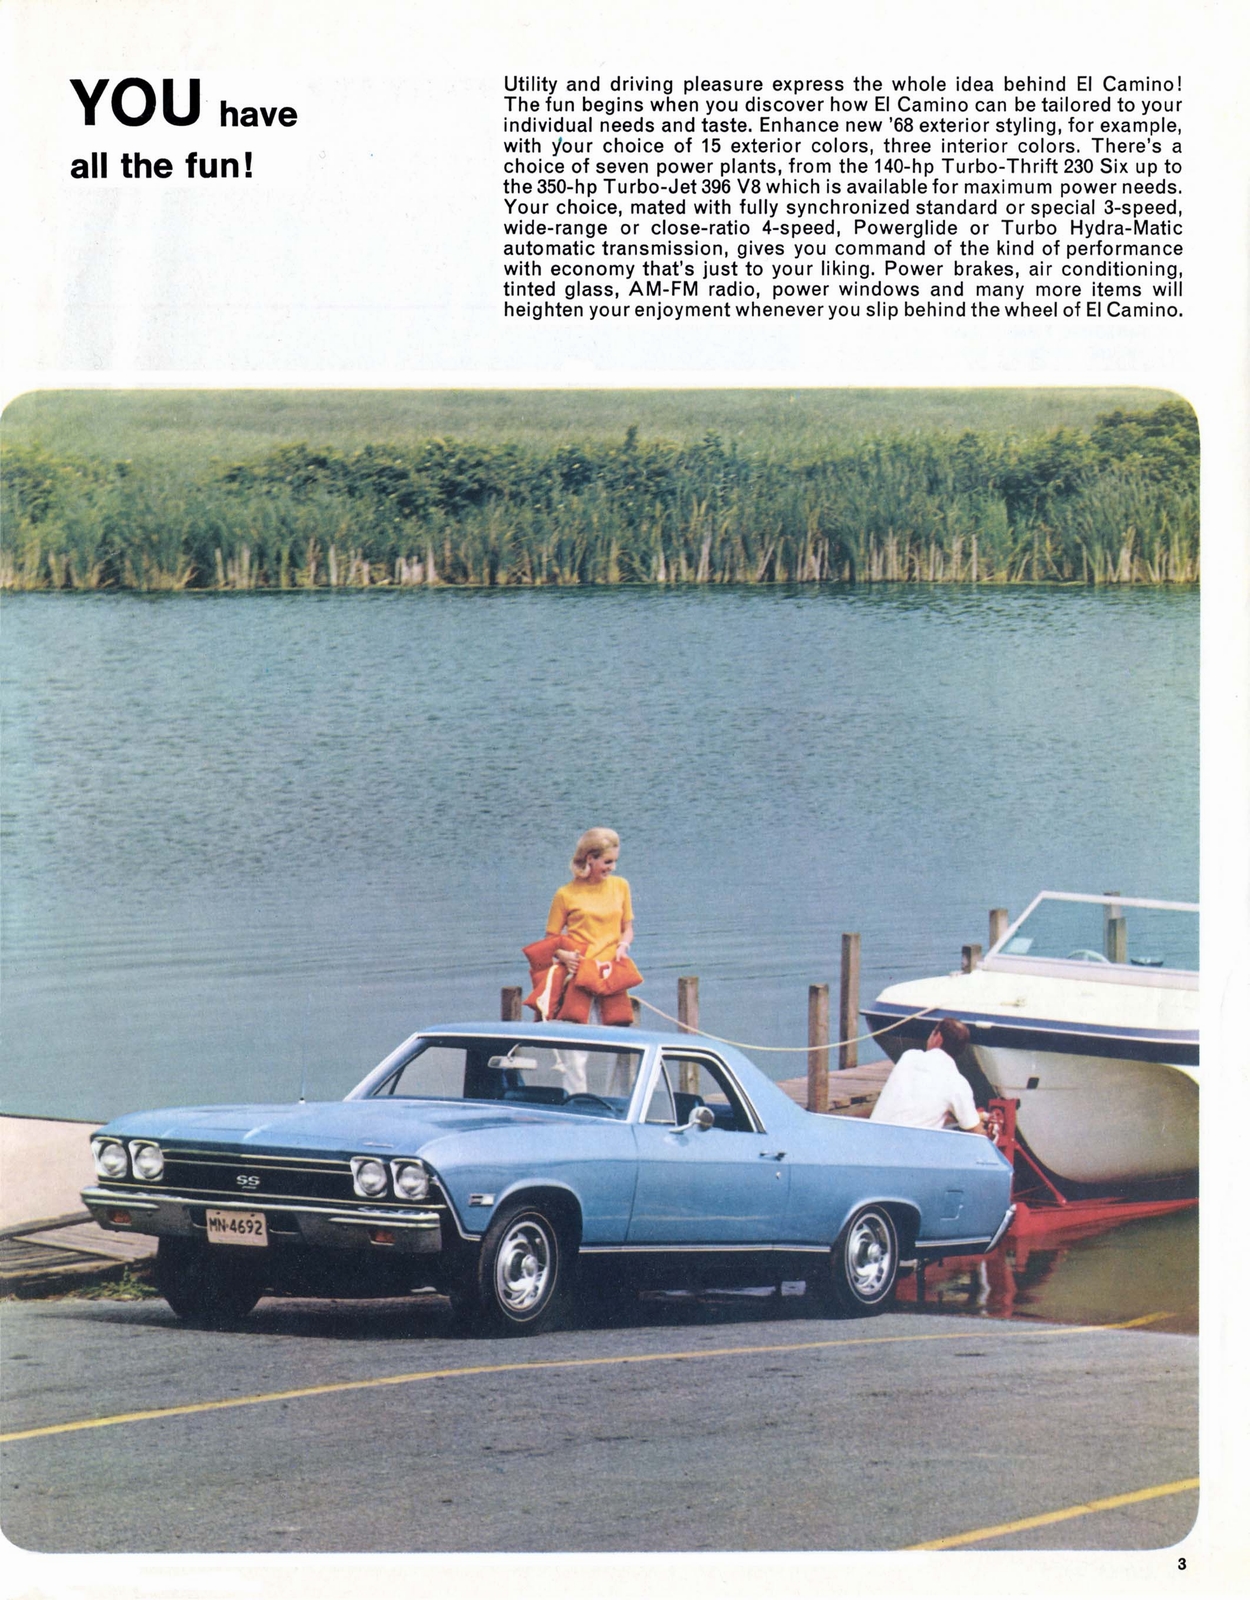 n_1968 Chevrolet El Camino (Rev1)-03.jpg